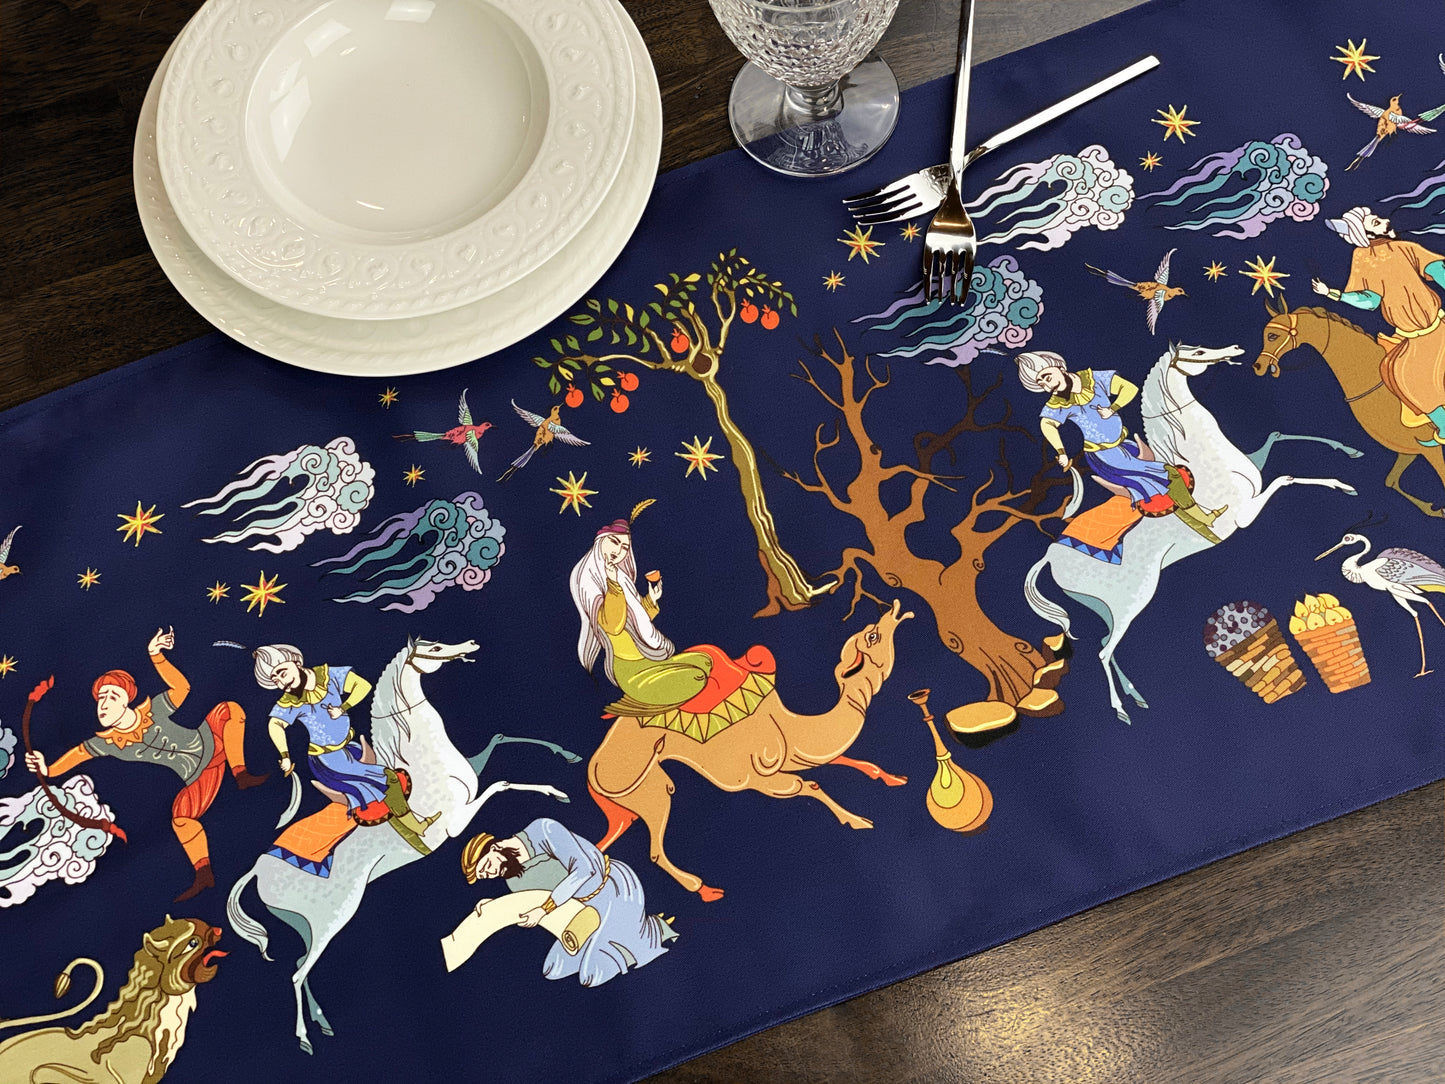 Double Sided Fairy-tale Art Print Table Runner 16" X 54", Medieval Persian Frescoes Art Design, Horse and Bird Centerpiece Runner